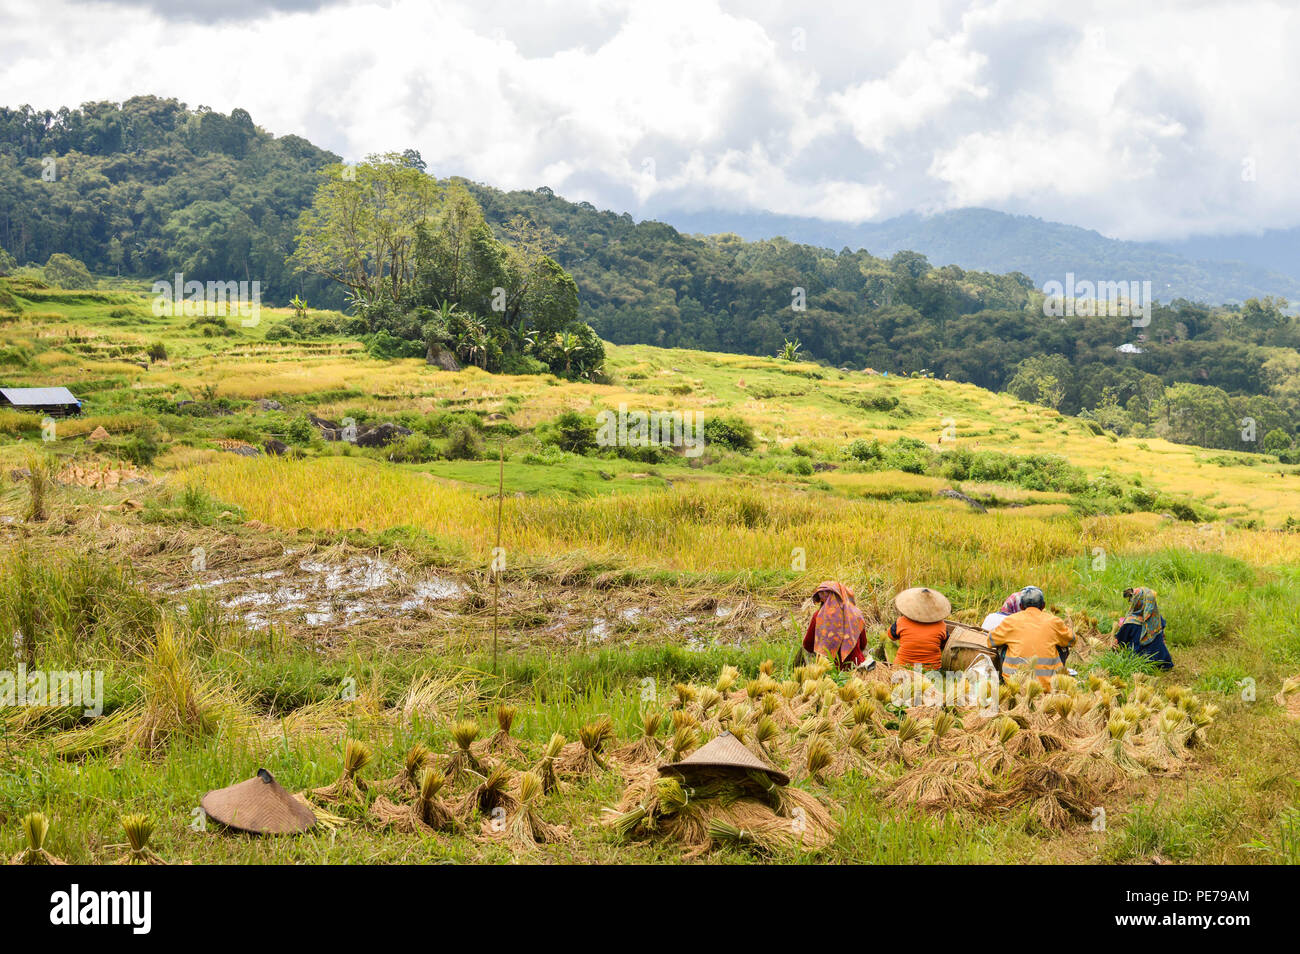 Paniramic landscape of the rice fields and farmers having their lunch break in Tana Toraja highlands near Batutumongi. South Sulawesi, Indonesia Stock Photo